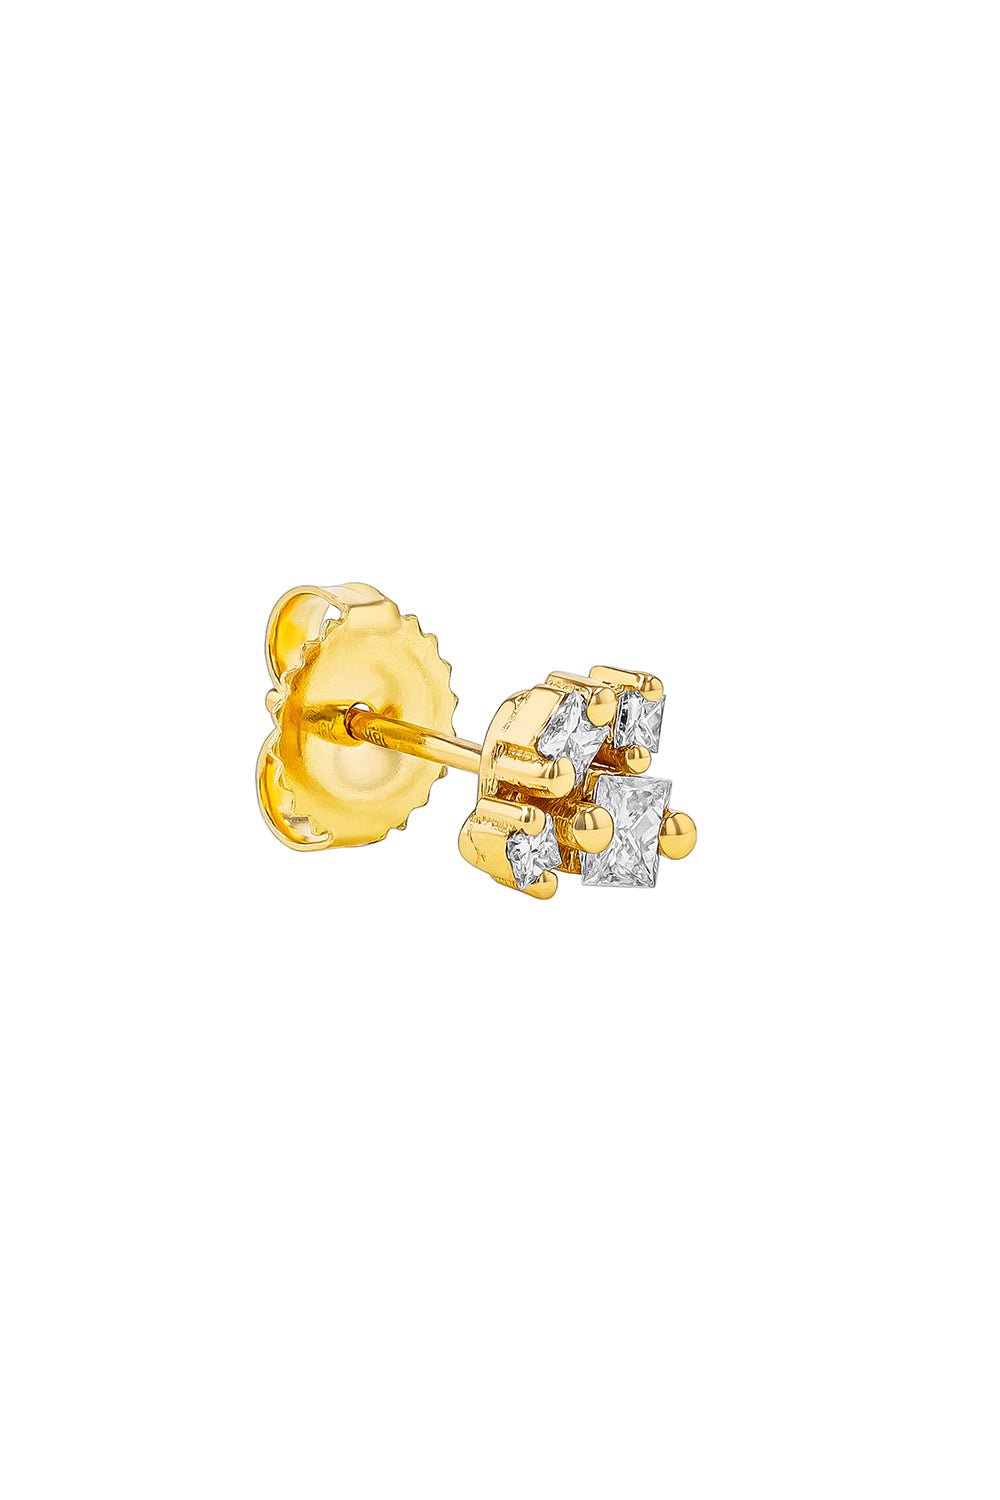 SUZANNE KALAN-Princess Cut Diamond Earrings-YELLOW GOLD